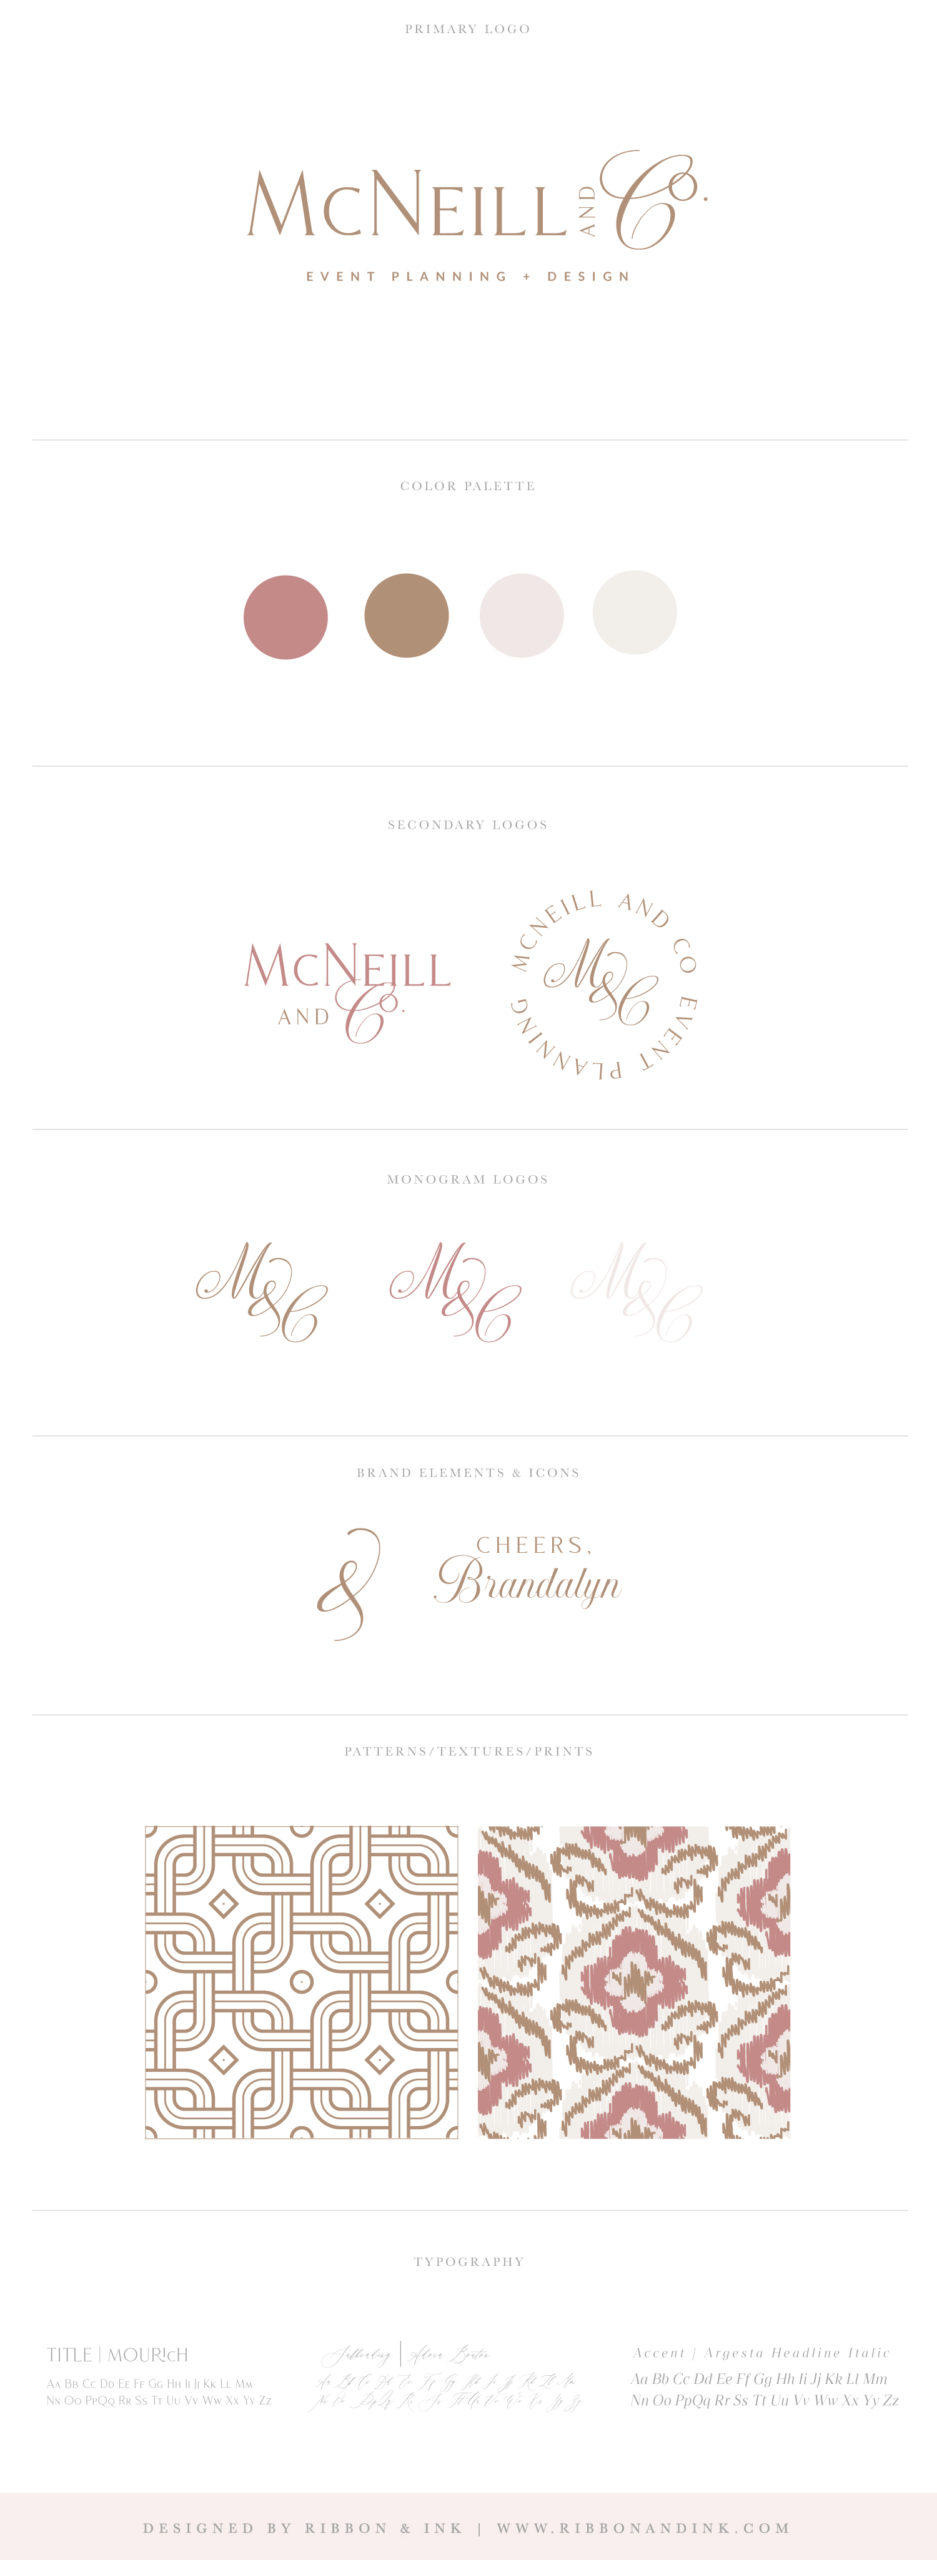 logo concepts / branding for wedding businesses and professionals / creatives / brand board / brand designer / branding for women / wedding planners / modern / elegant / romantic